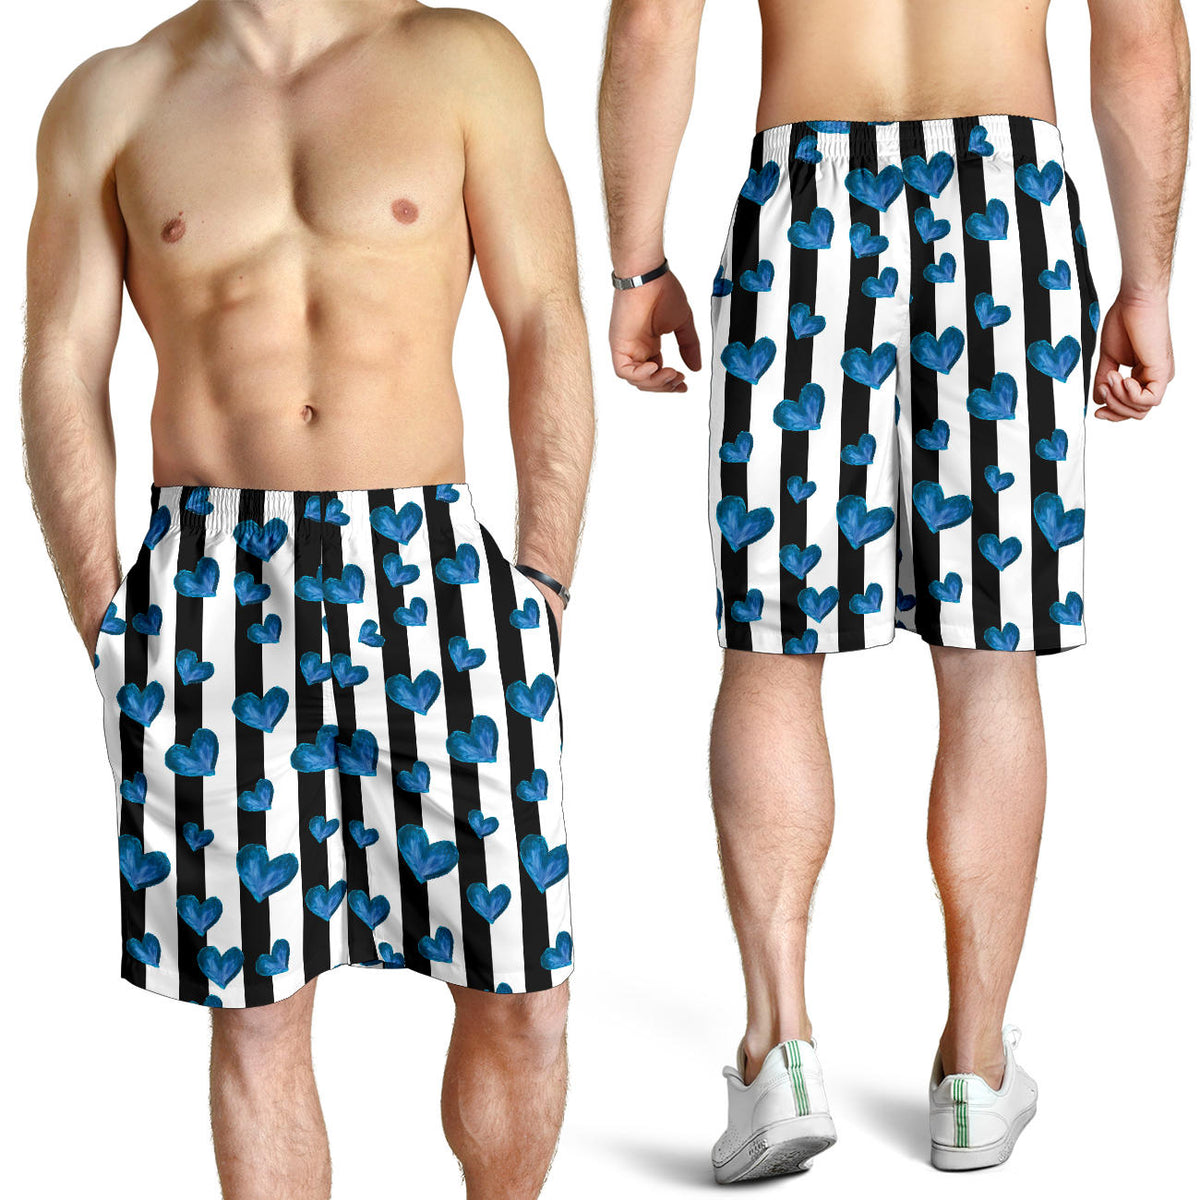 Blue Hearts Men's Shorts – This is iT Original